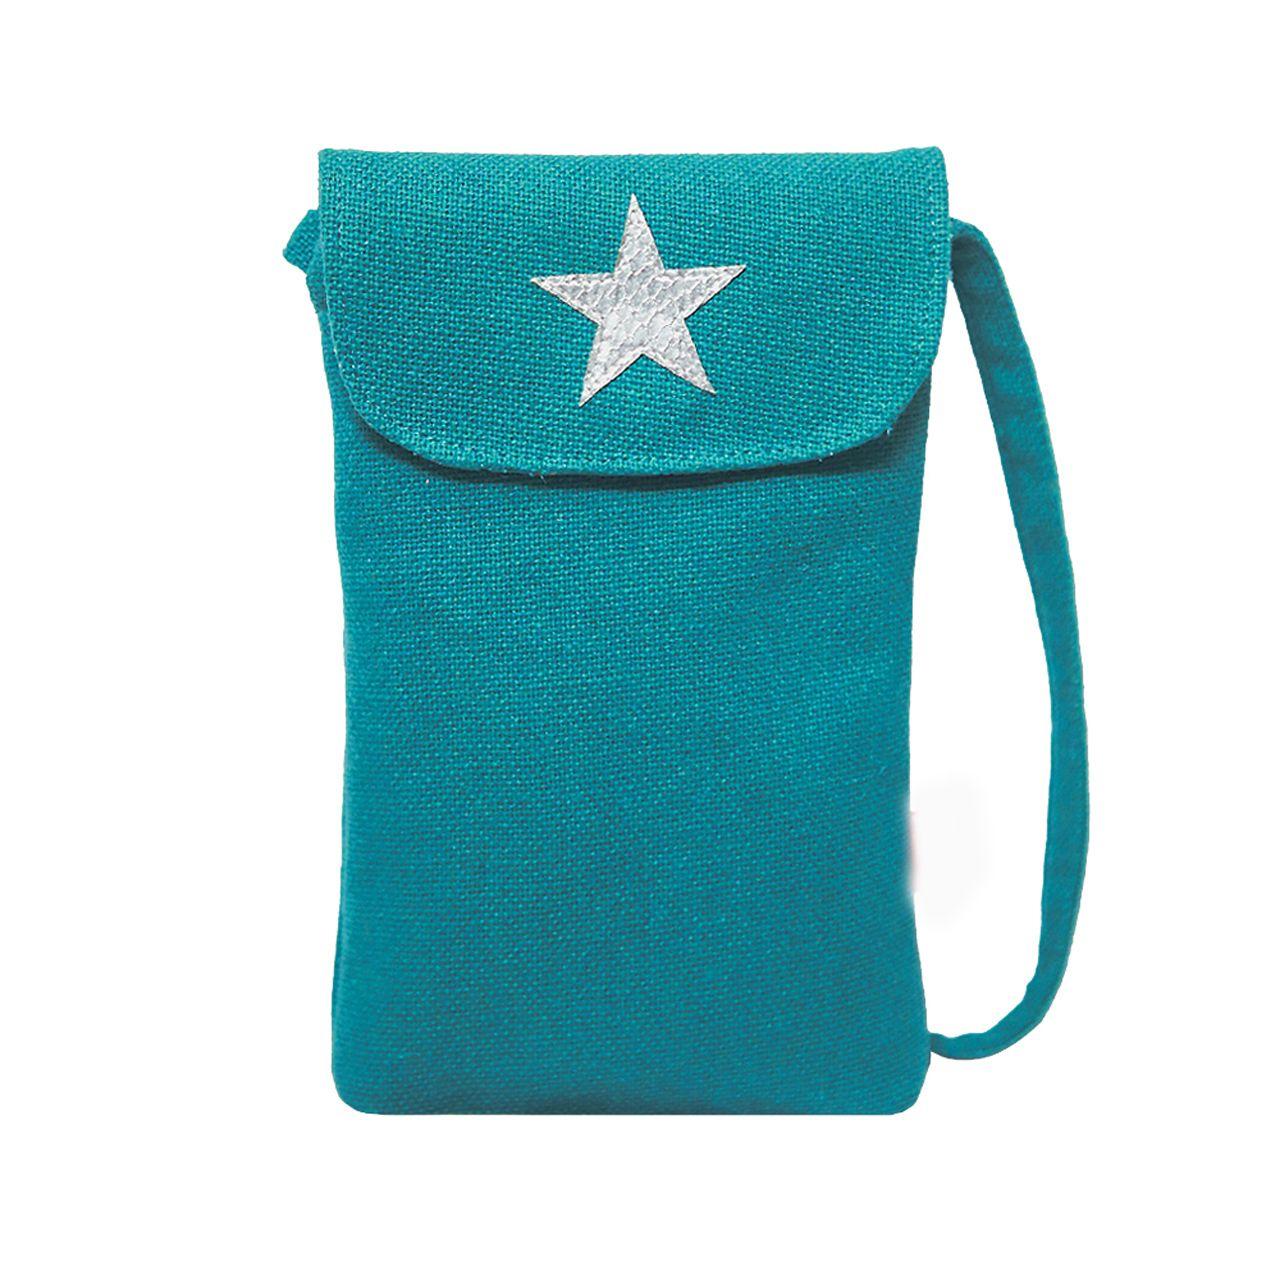 Star Cross Body Bag Teal